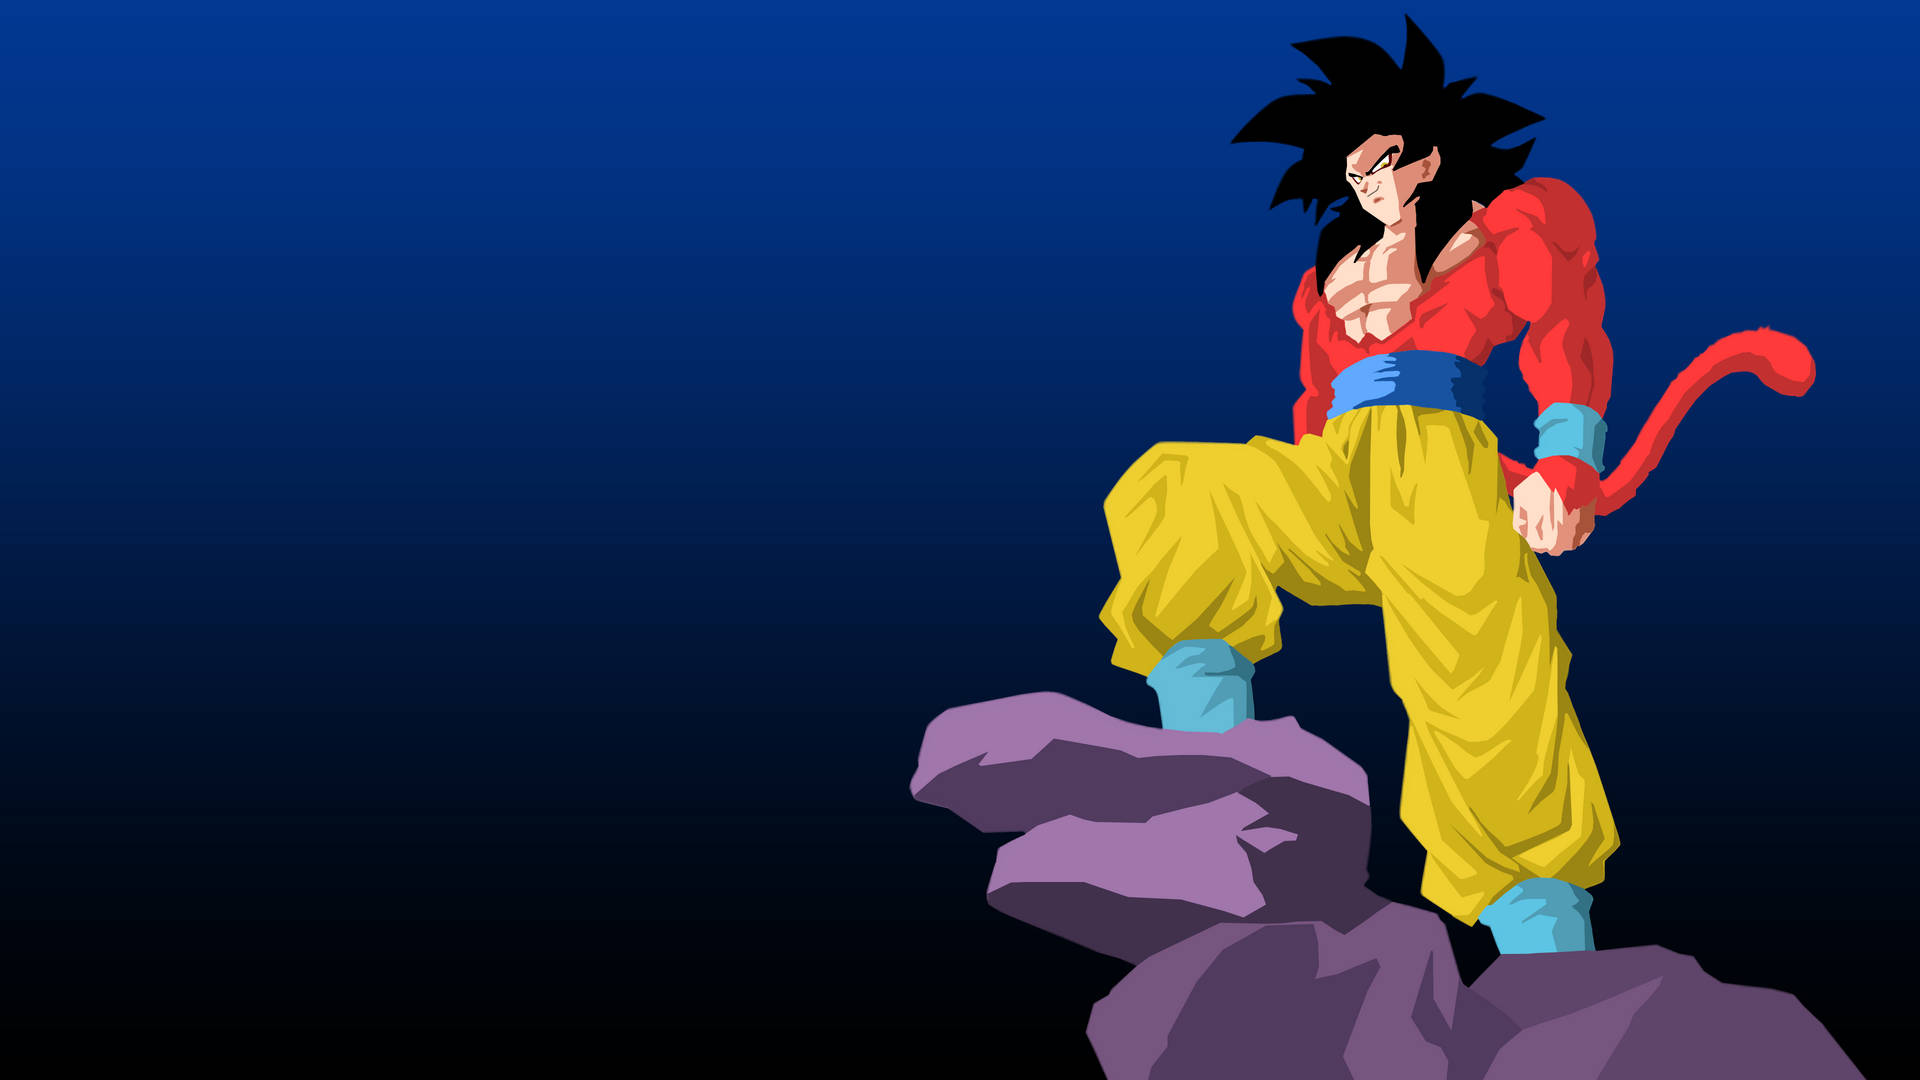 Supersaiyan 4 Goku Dbz 4k: [translation] Super Saiyan 4 Goku I Dbz 4k. Wallpaper